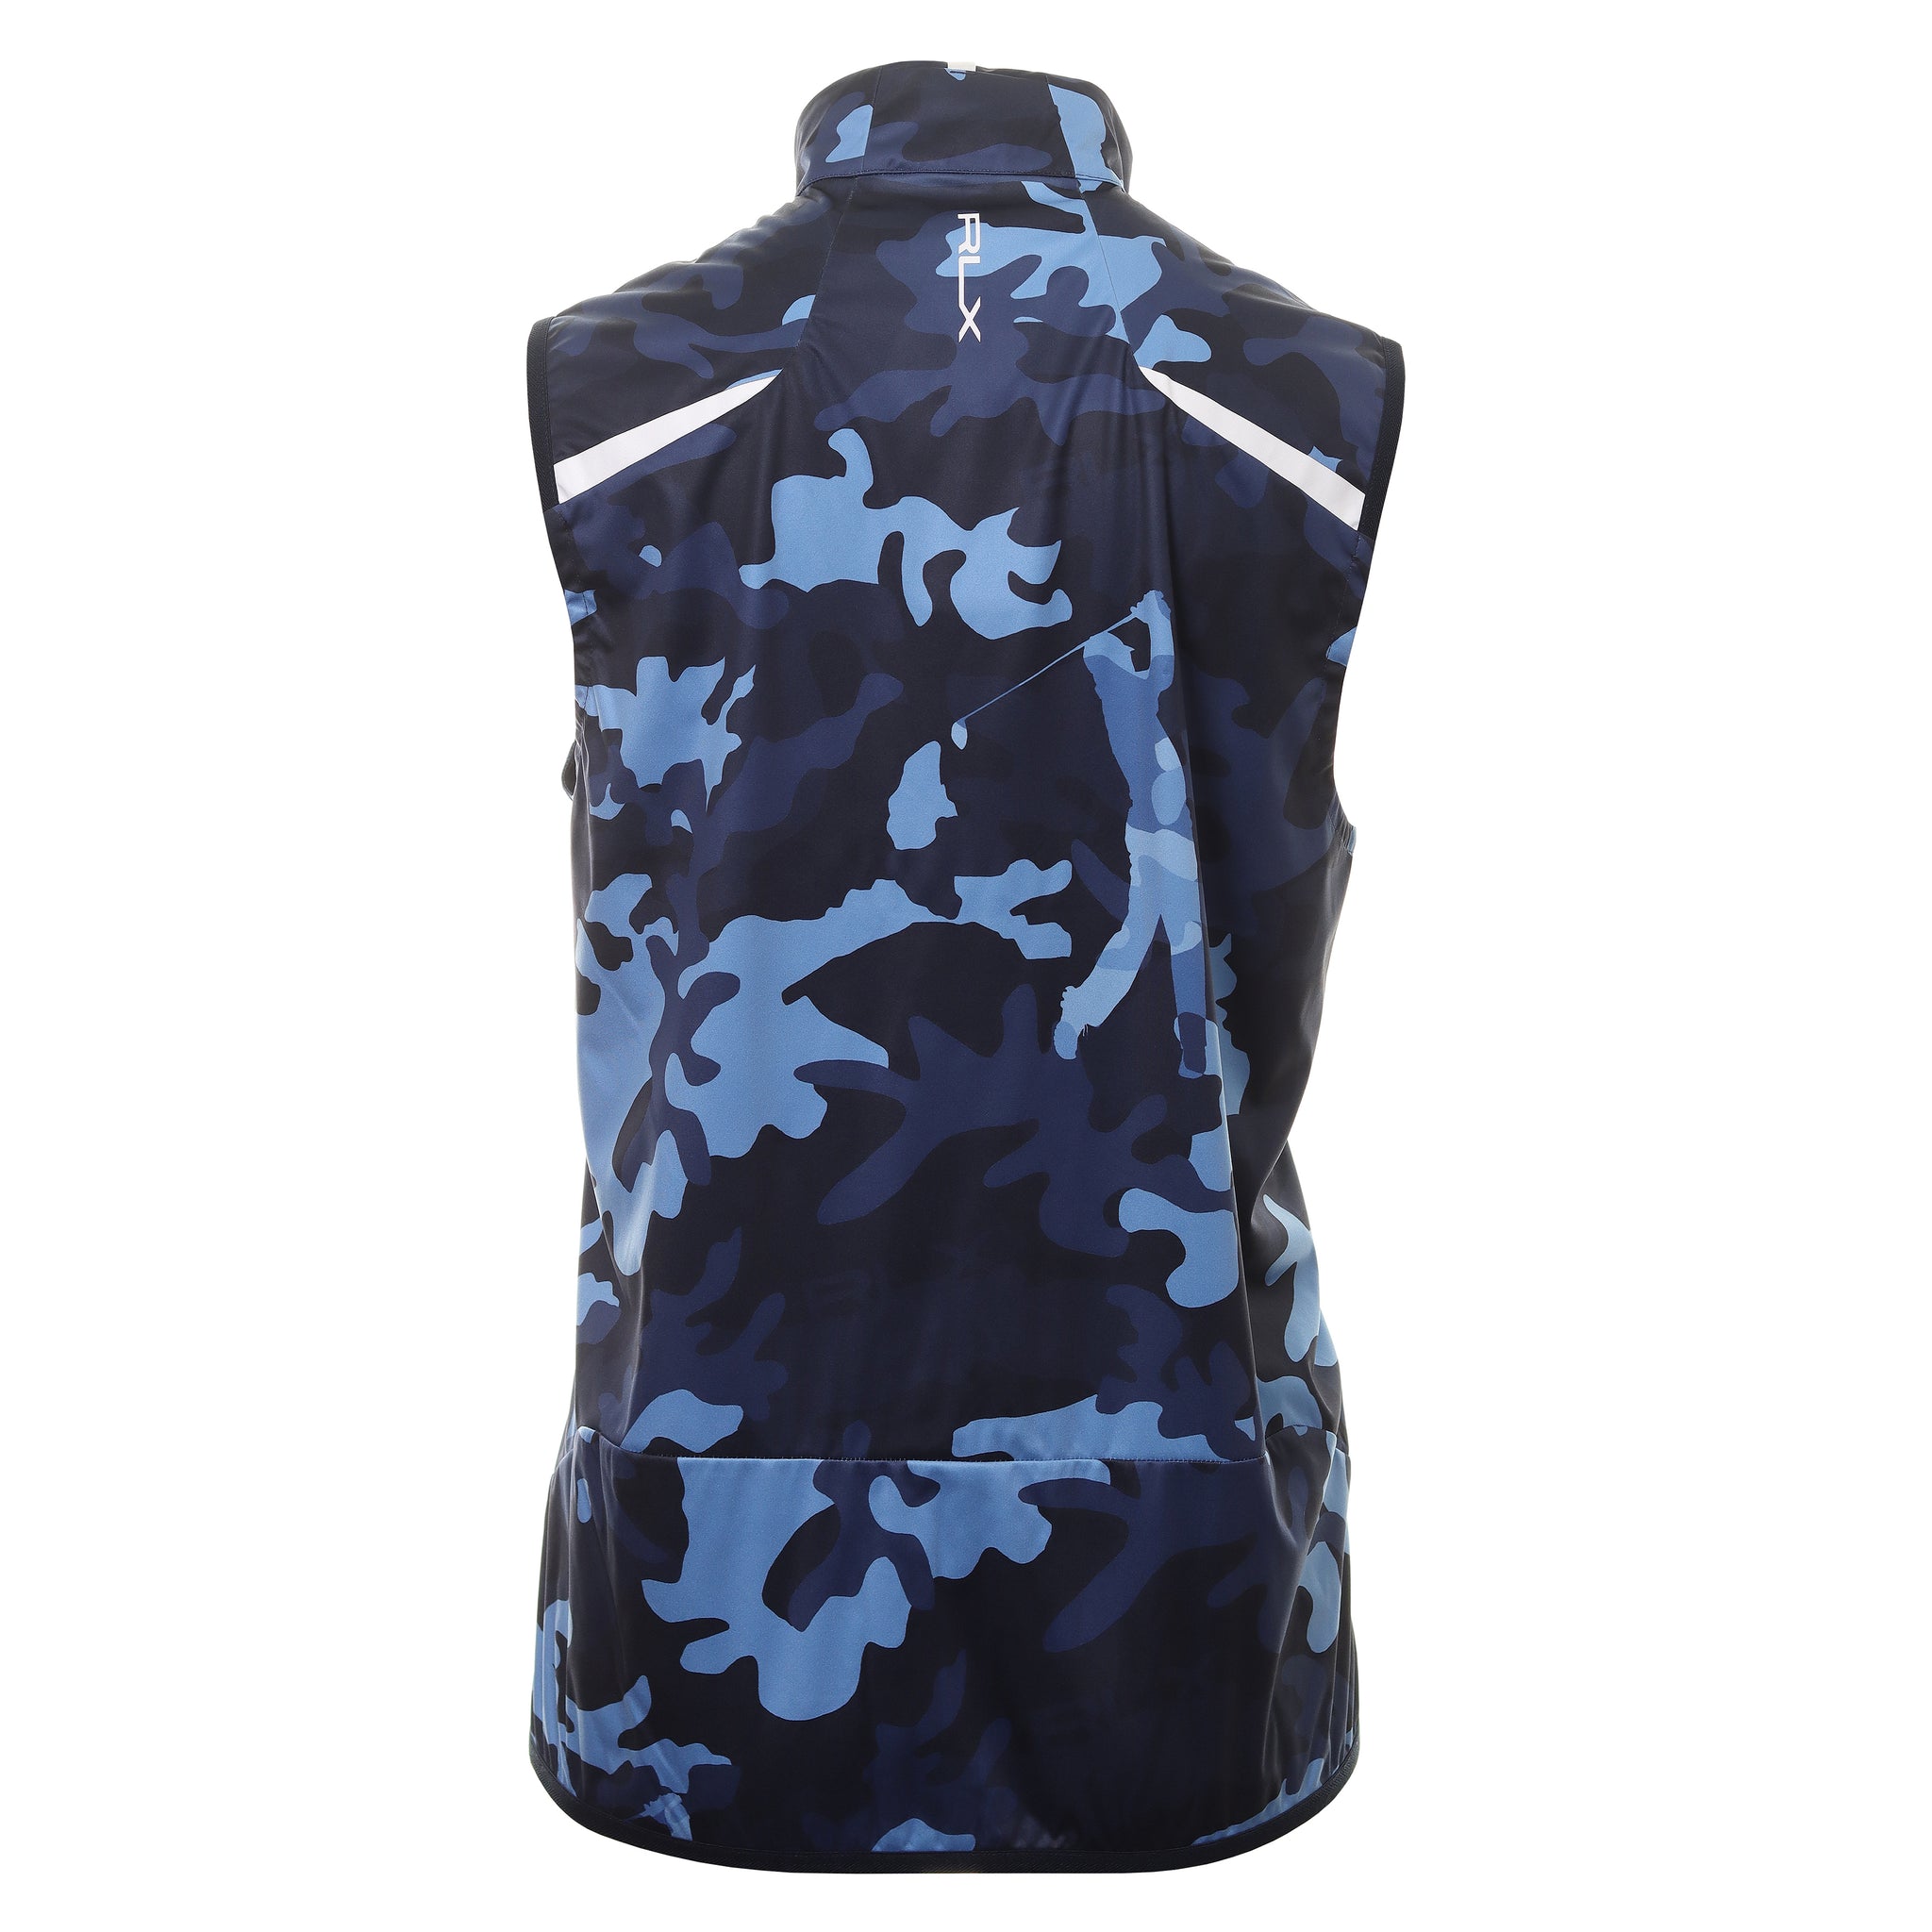 RLX Golf Tech Full-Zip Vest